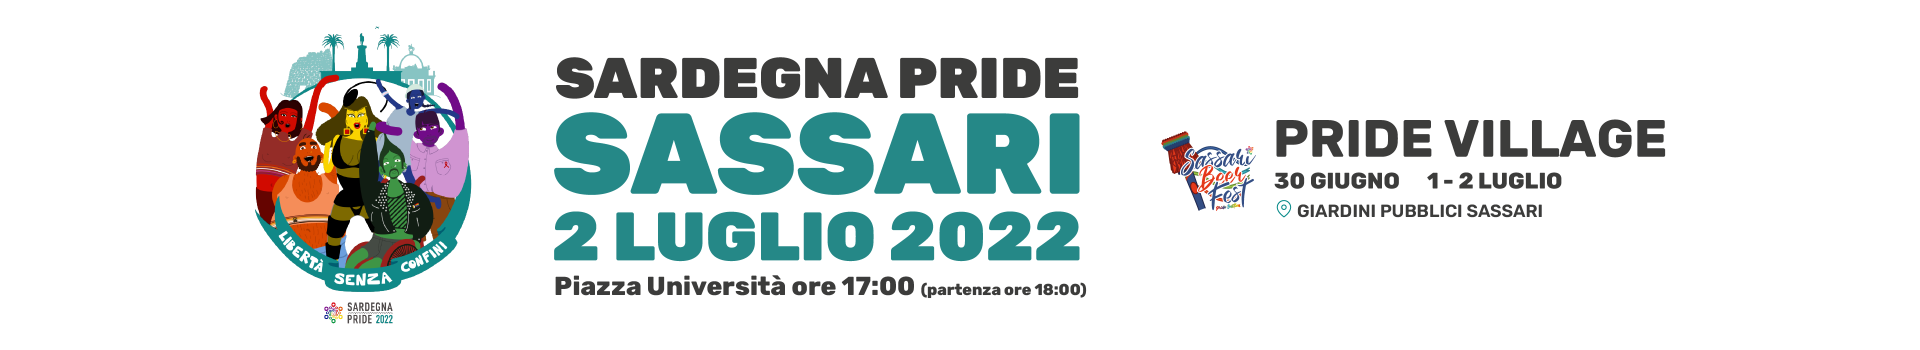 Sardegna Pride 2022